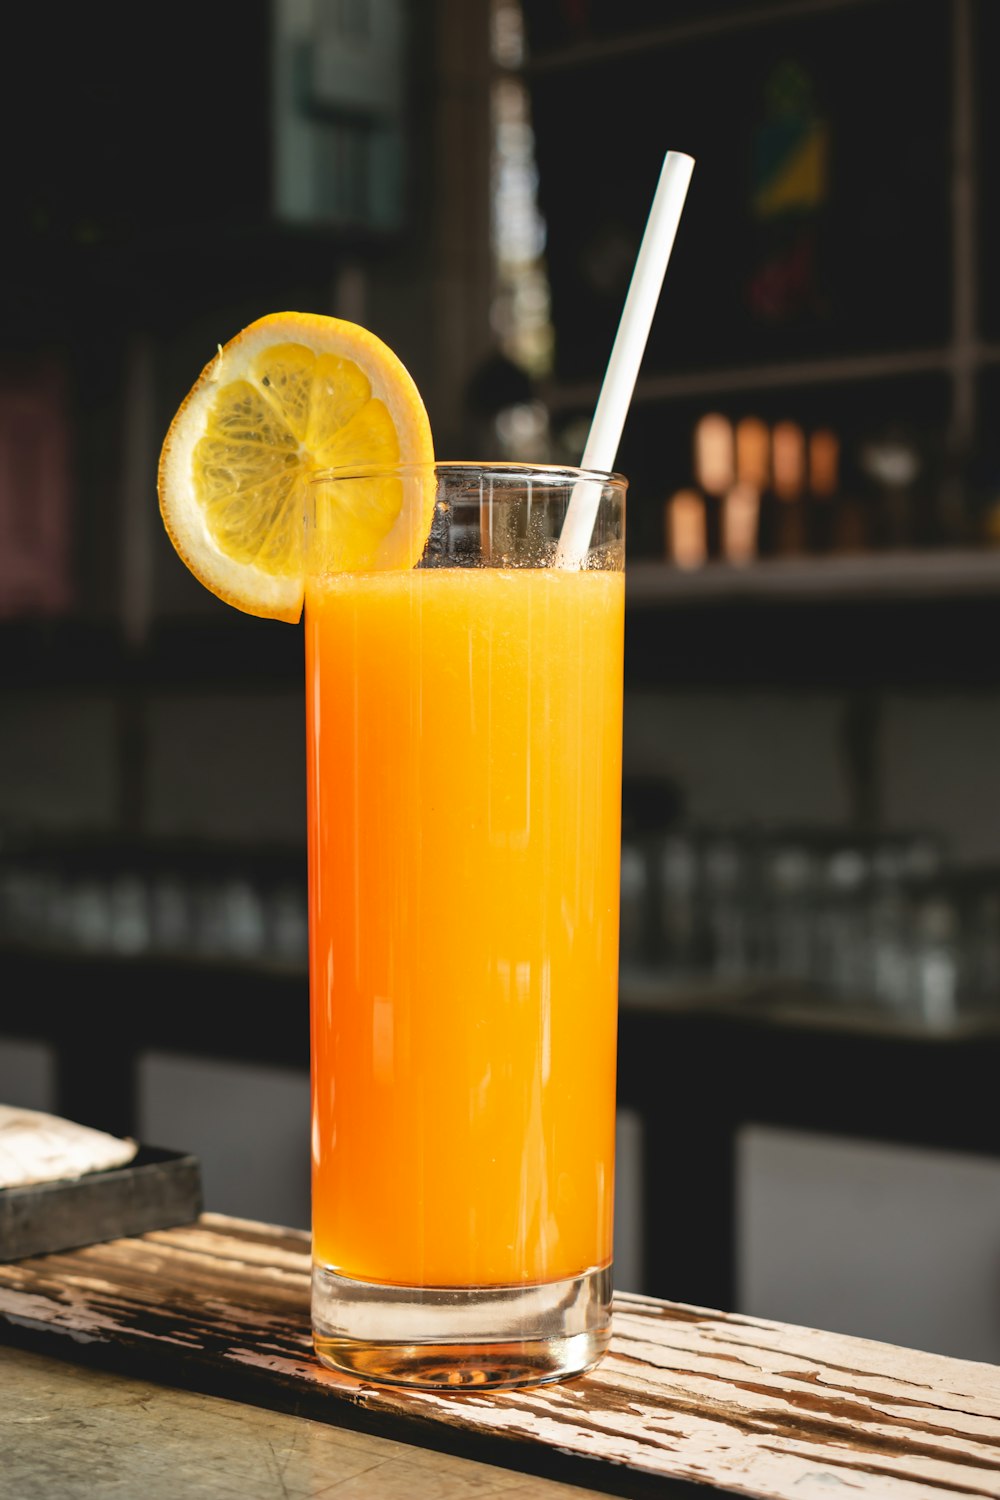 750+ Orange Juice Pictures | Download Free Images on Unsplash